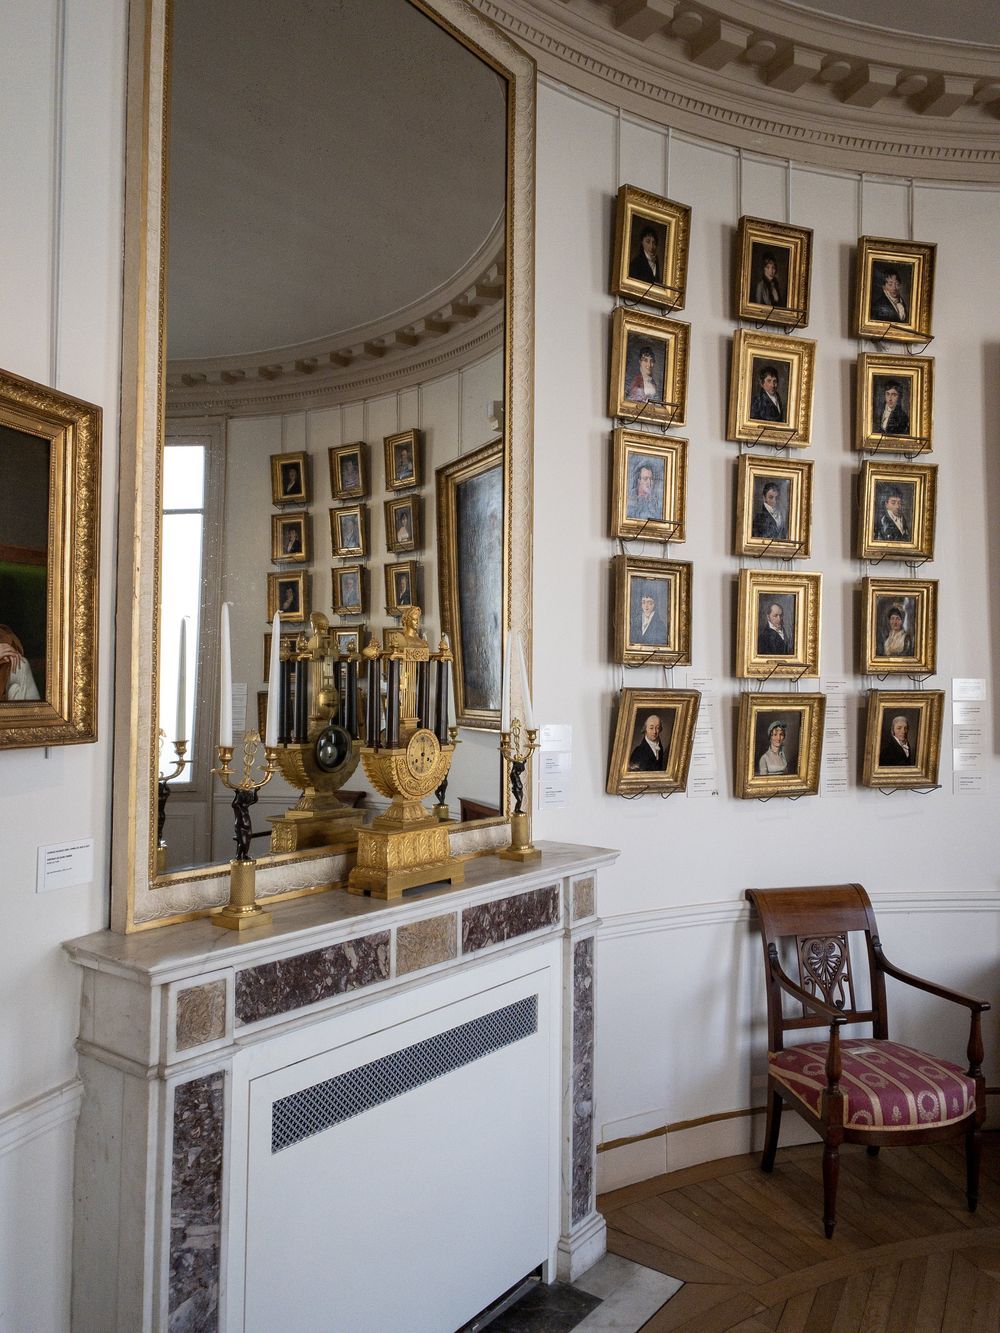 Musee Marmottan Monet - upstairs 19th century office